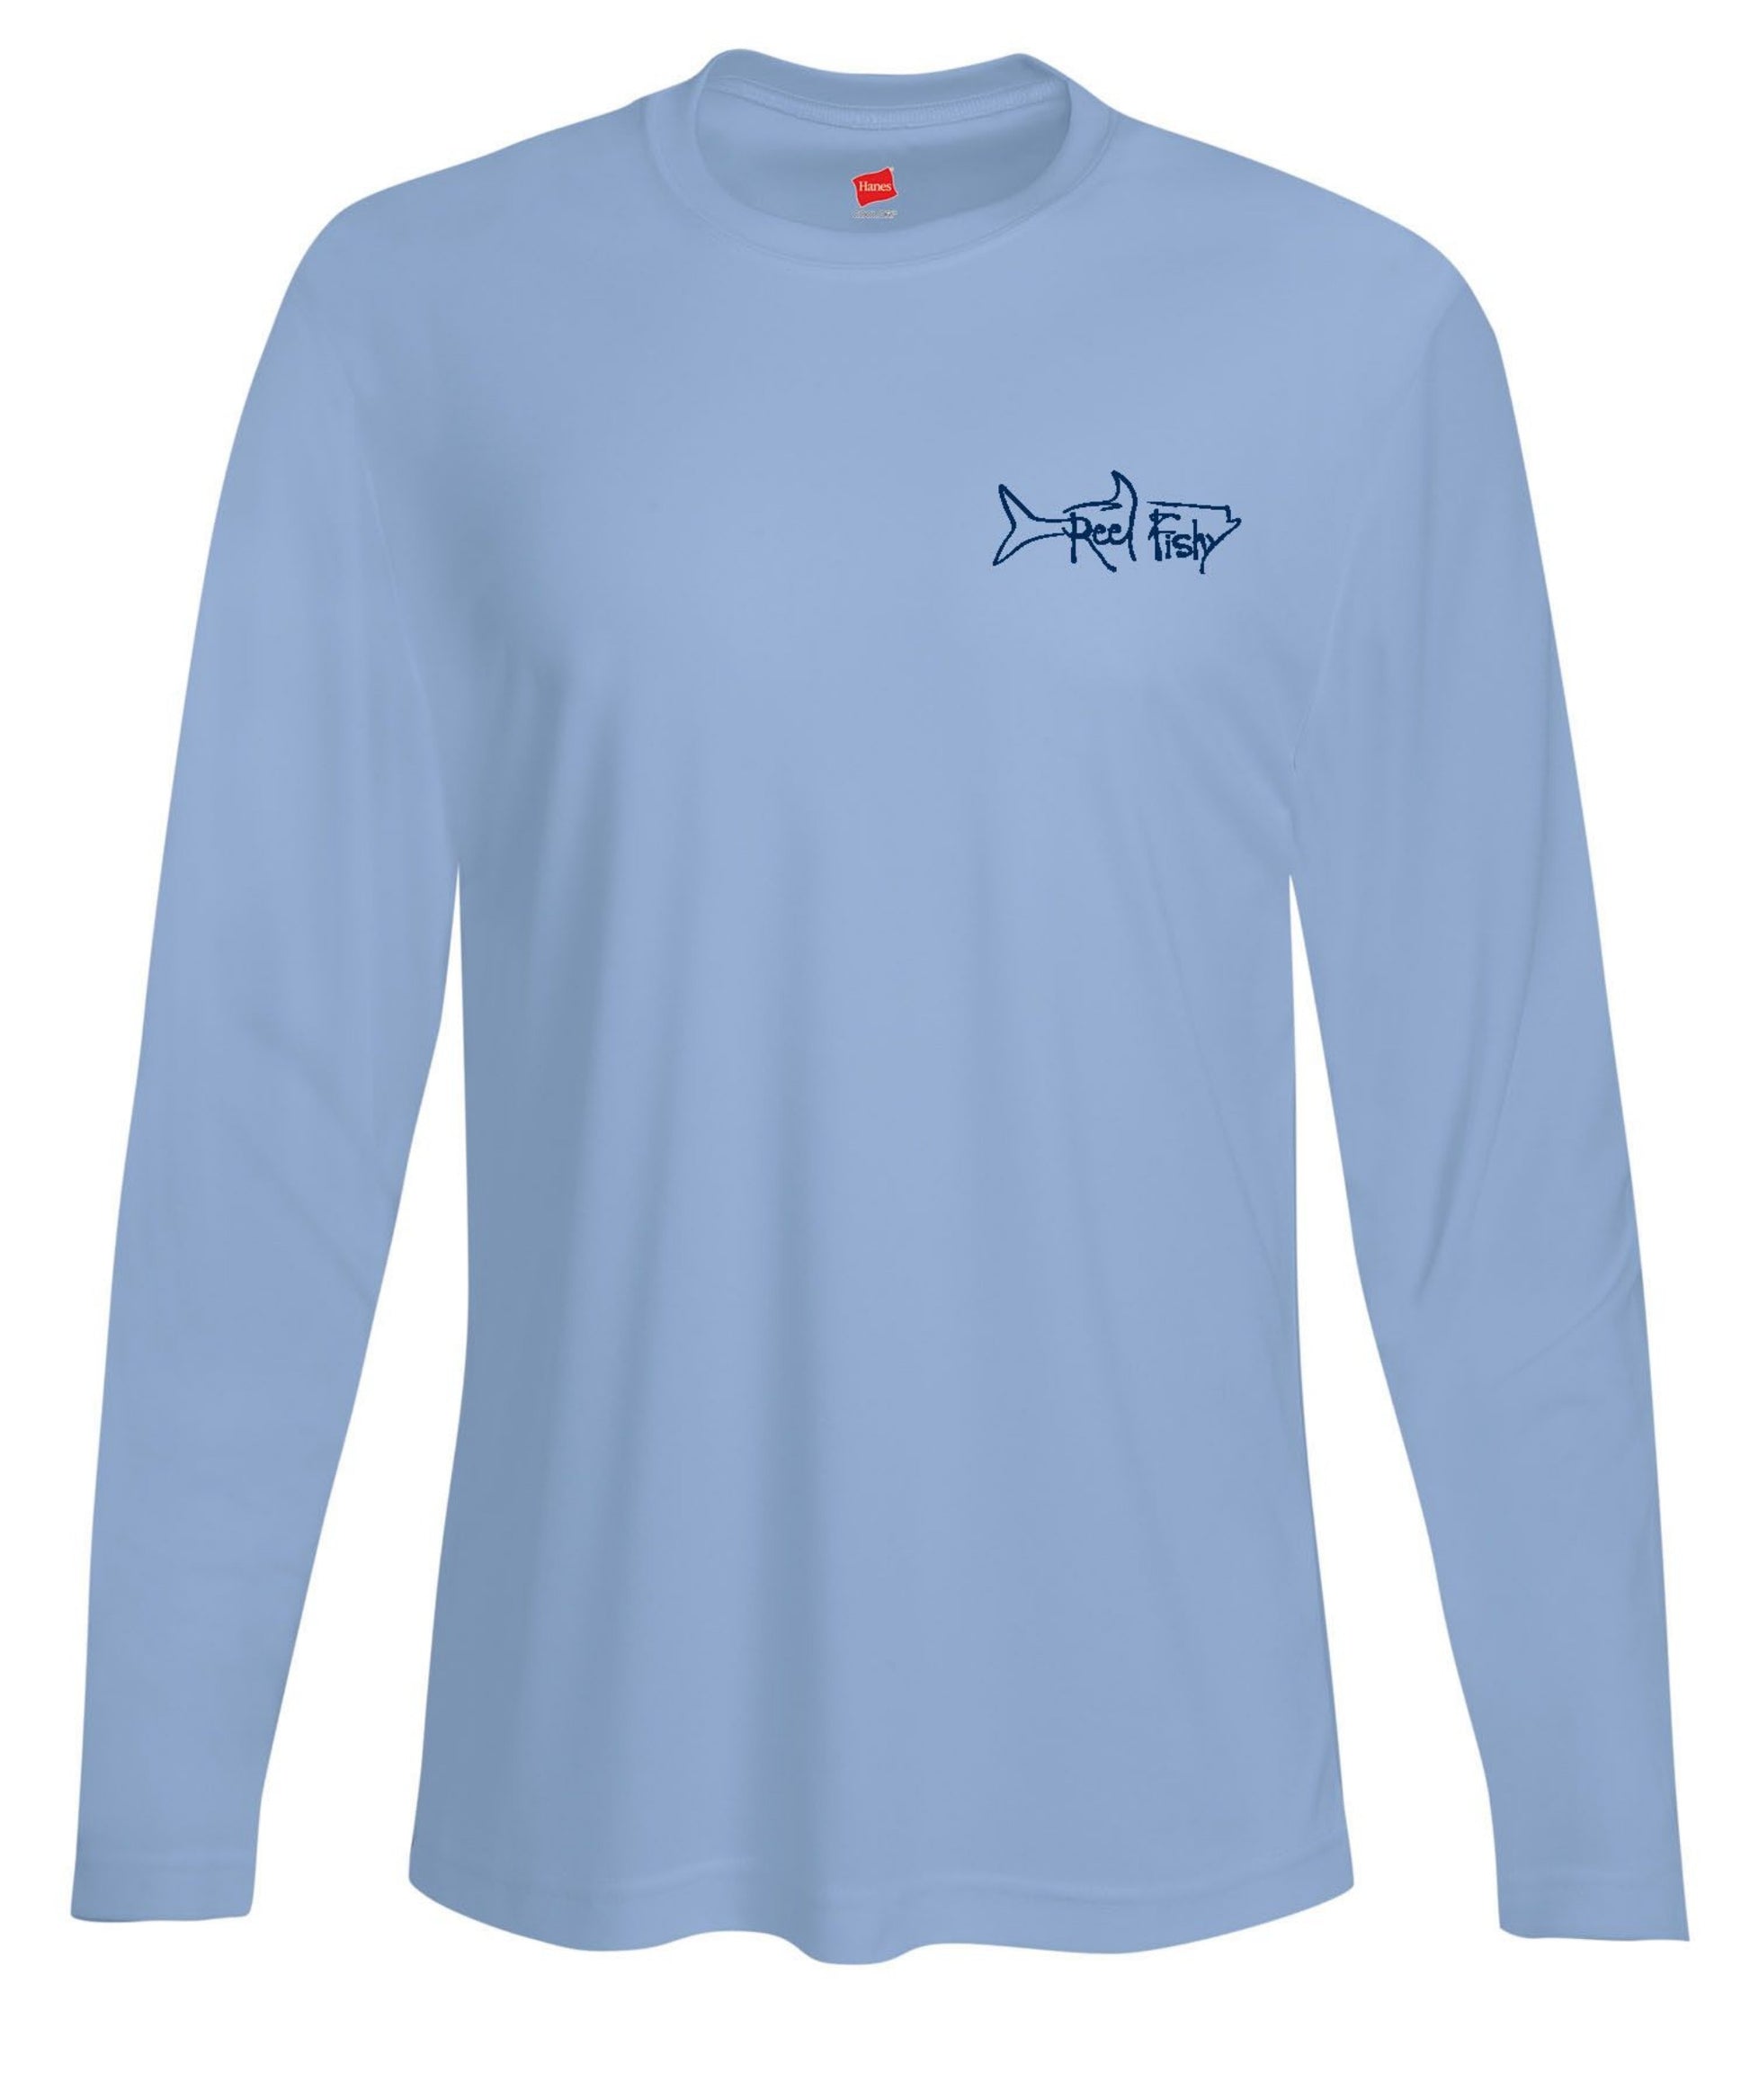 Turtle Performance Dry-Fit Fishing 50+uv Shirt -Reel Fishy Apparel S / Lt. Blue S/S - unisex